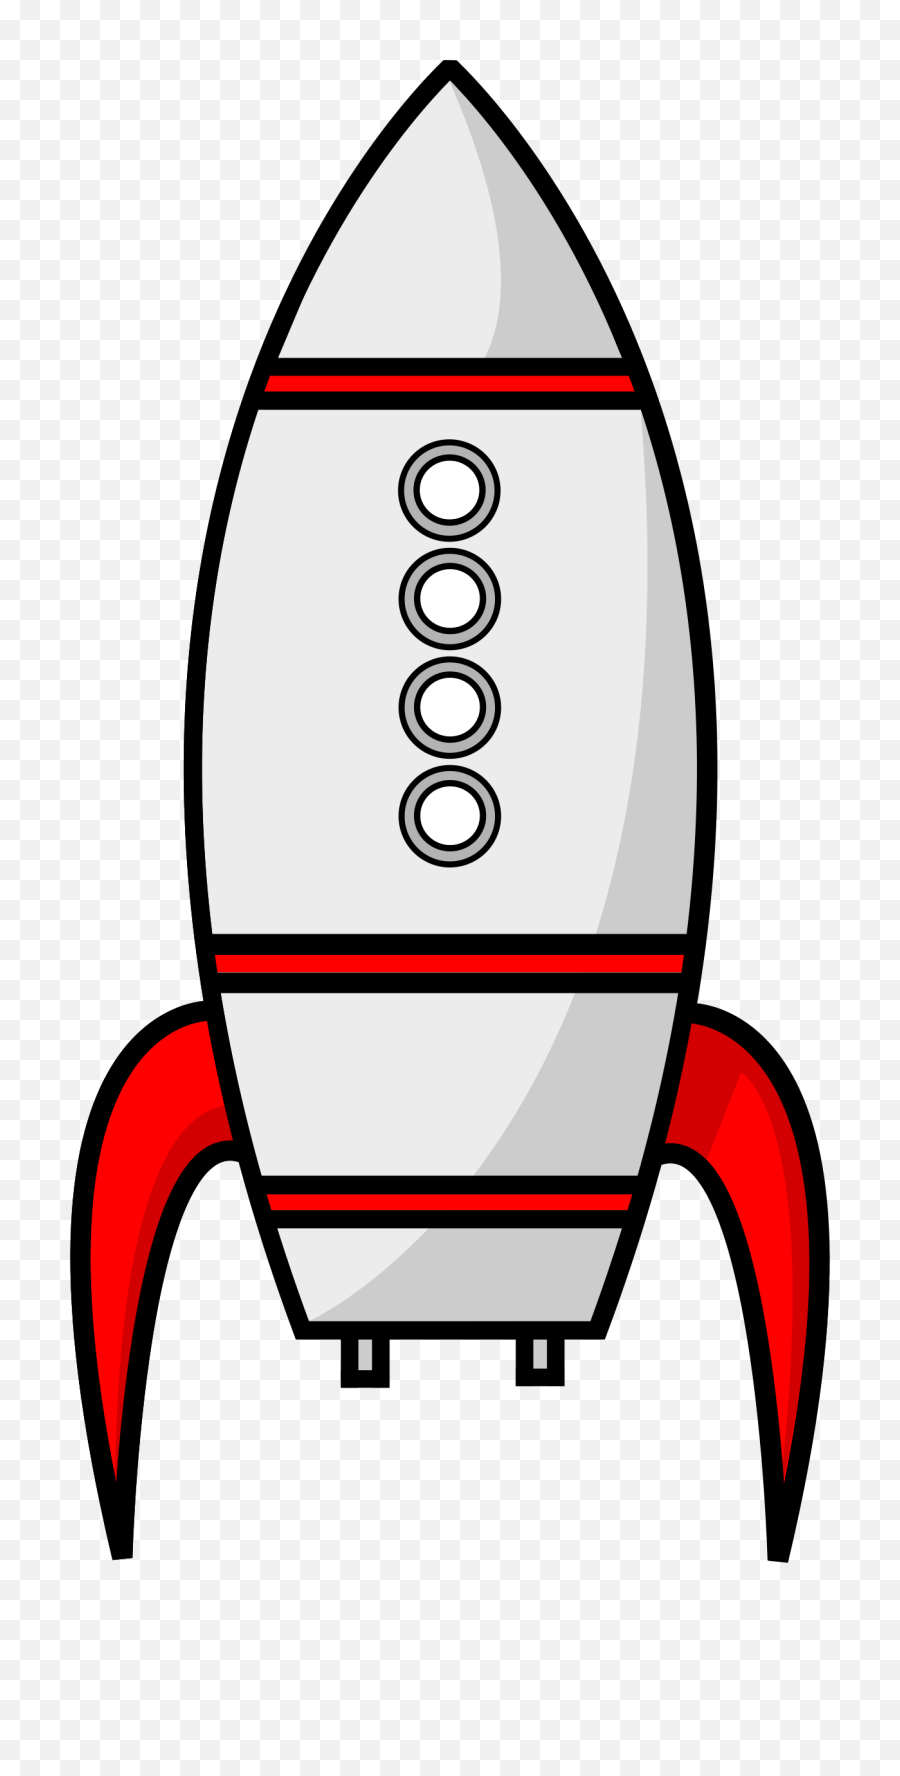 This Free Icons Png Design Of Cartoon Moon Rocket Remix - Rocket Cartoon,Space Ship Png